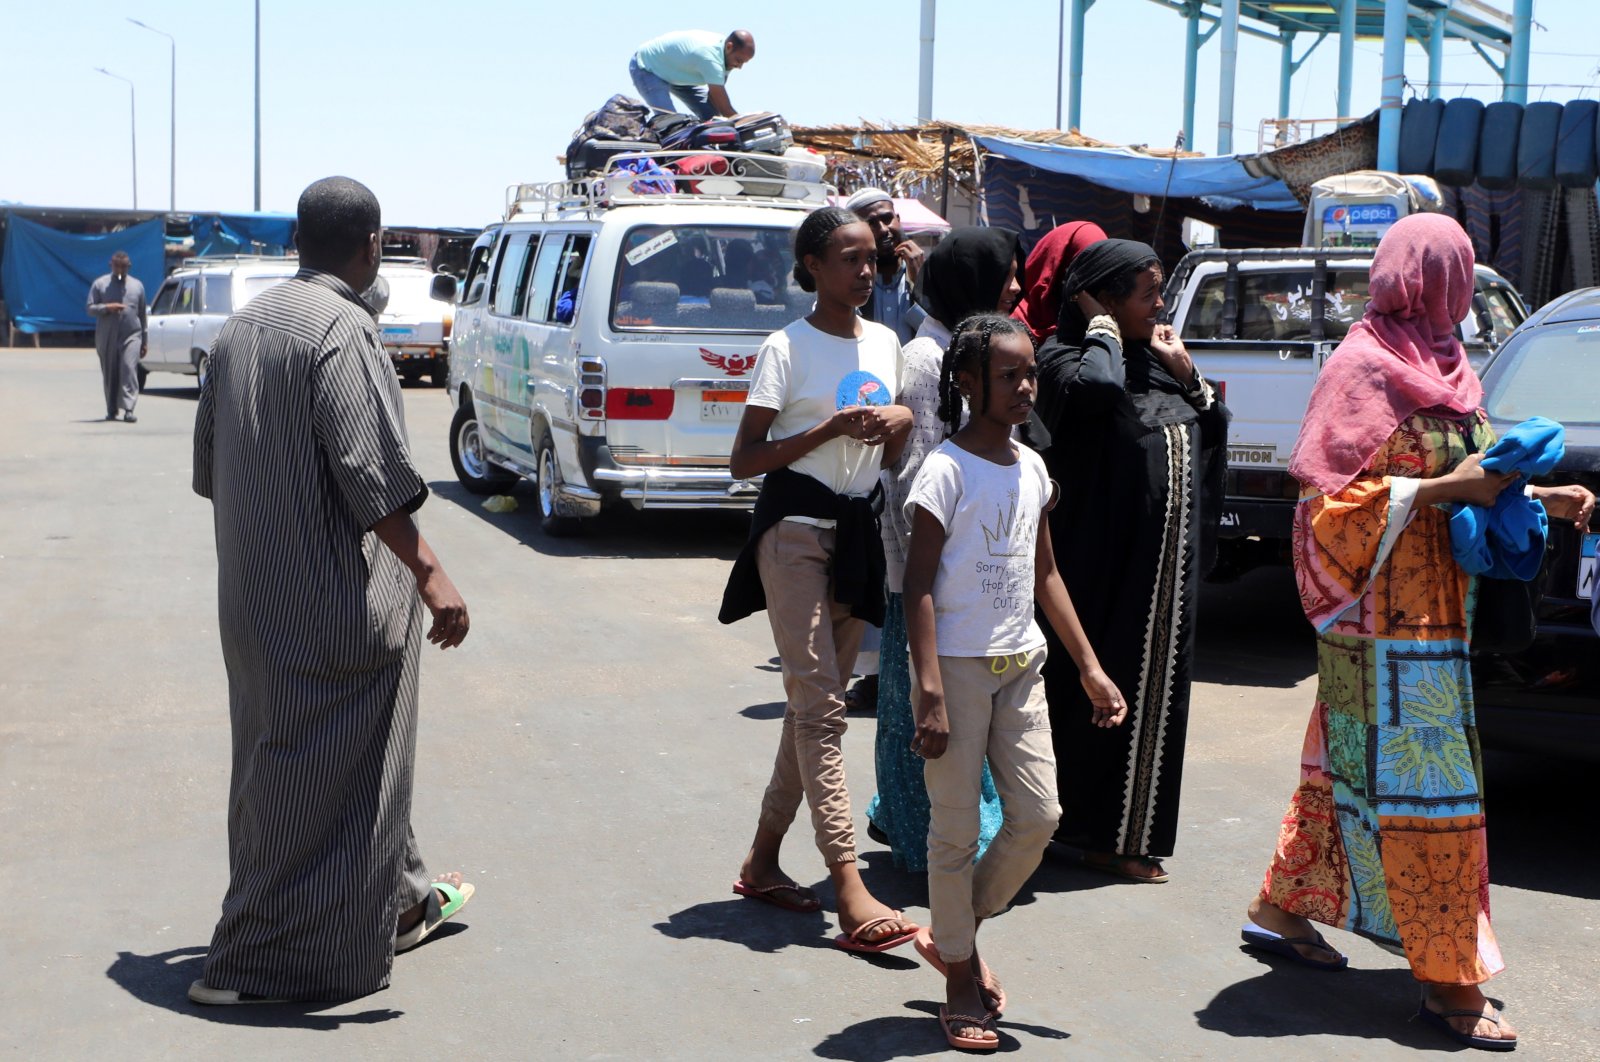 Lebih dari 800.000 mungkin melarikan diri dari Sudan di tengah krisis: PBB